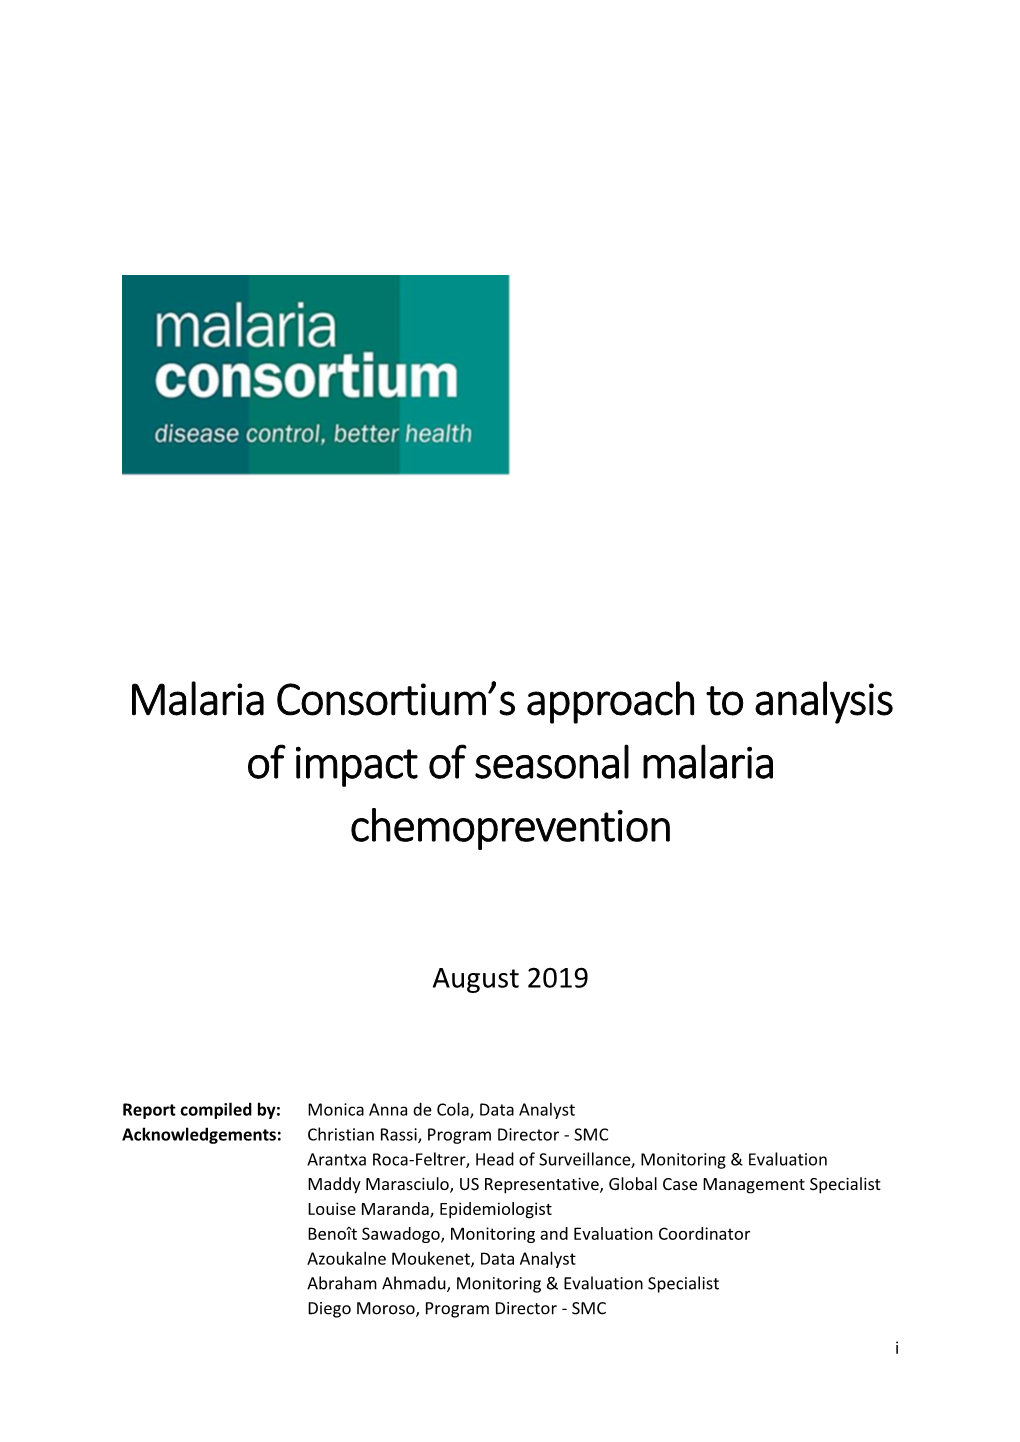 Malaria Consortium's Approach to Analysis of Impact of Seasonal